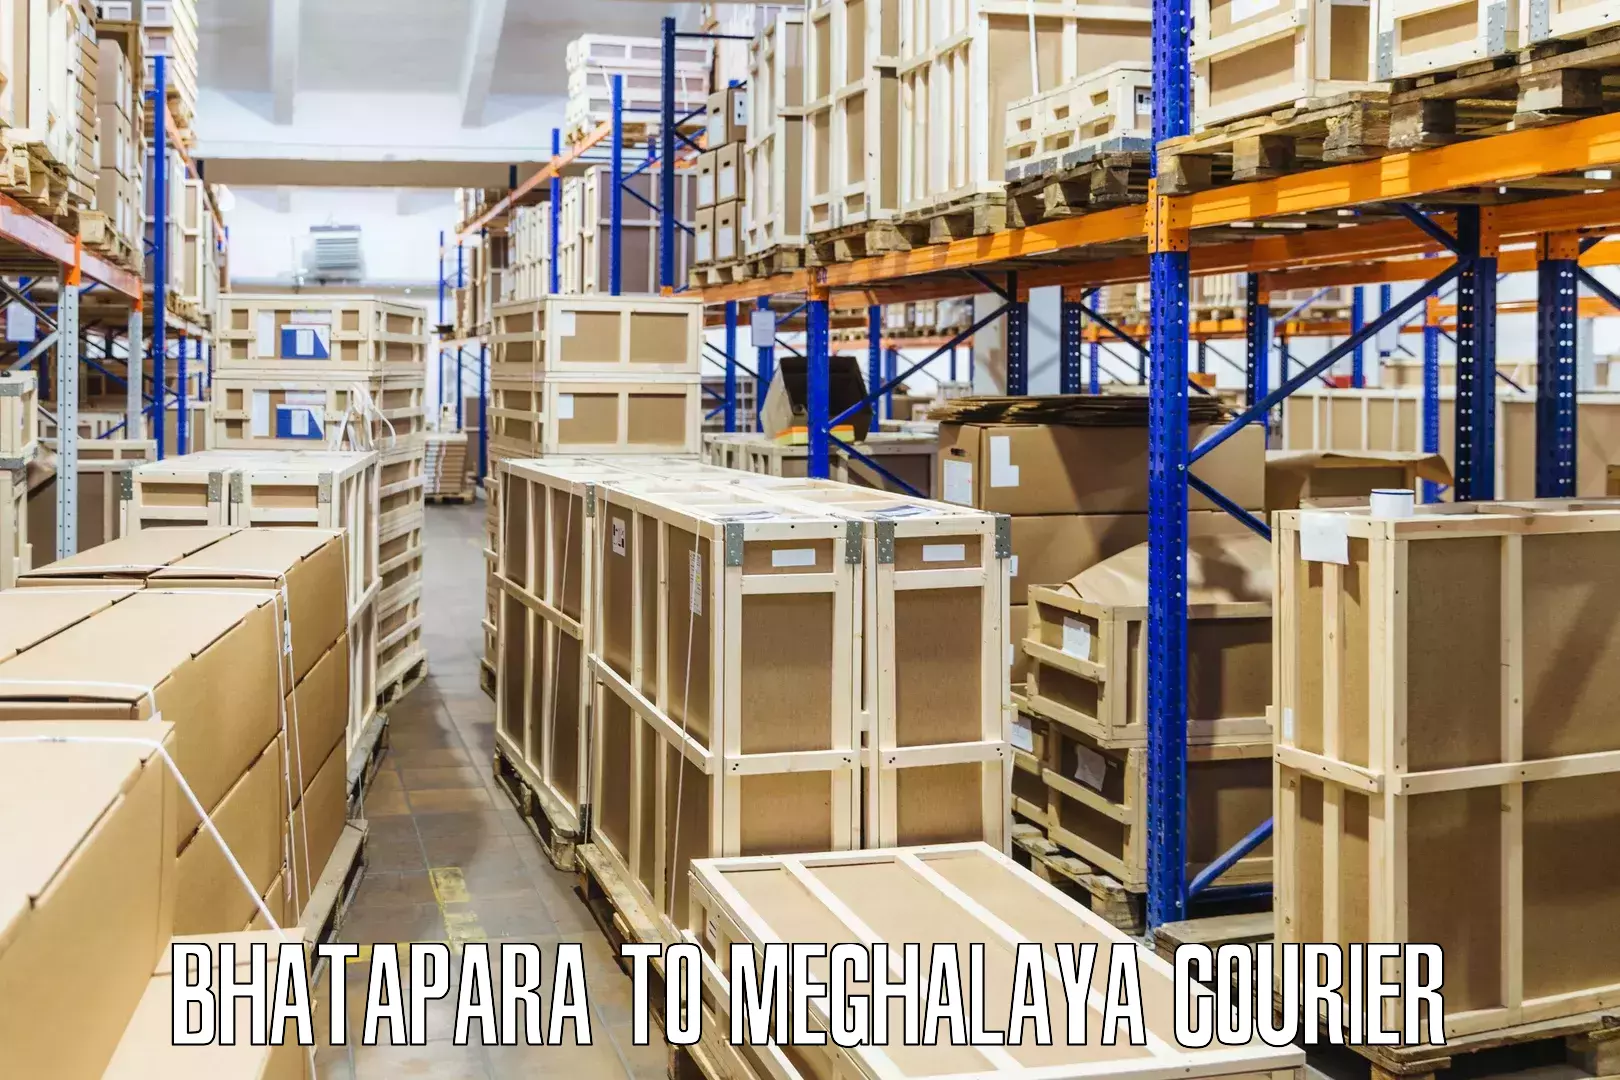 Quality courier partnerships Bhatapara to Meghalaya